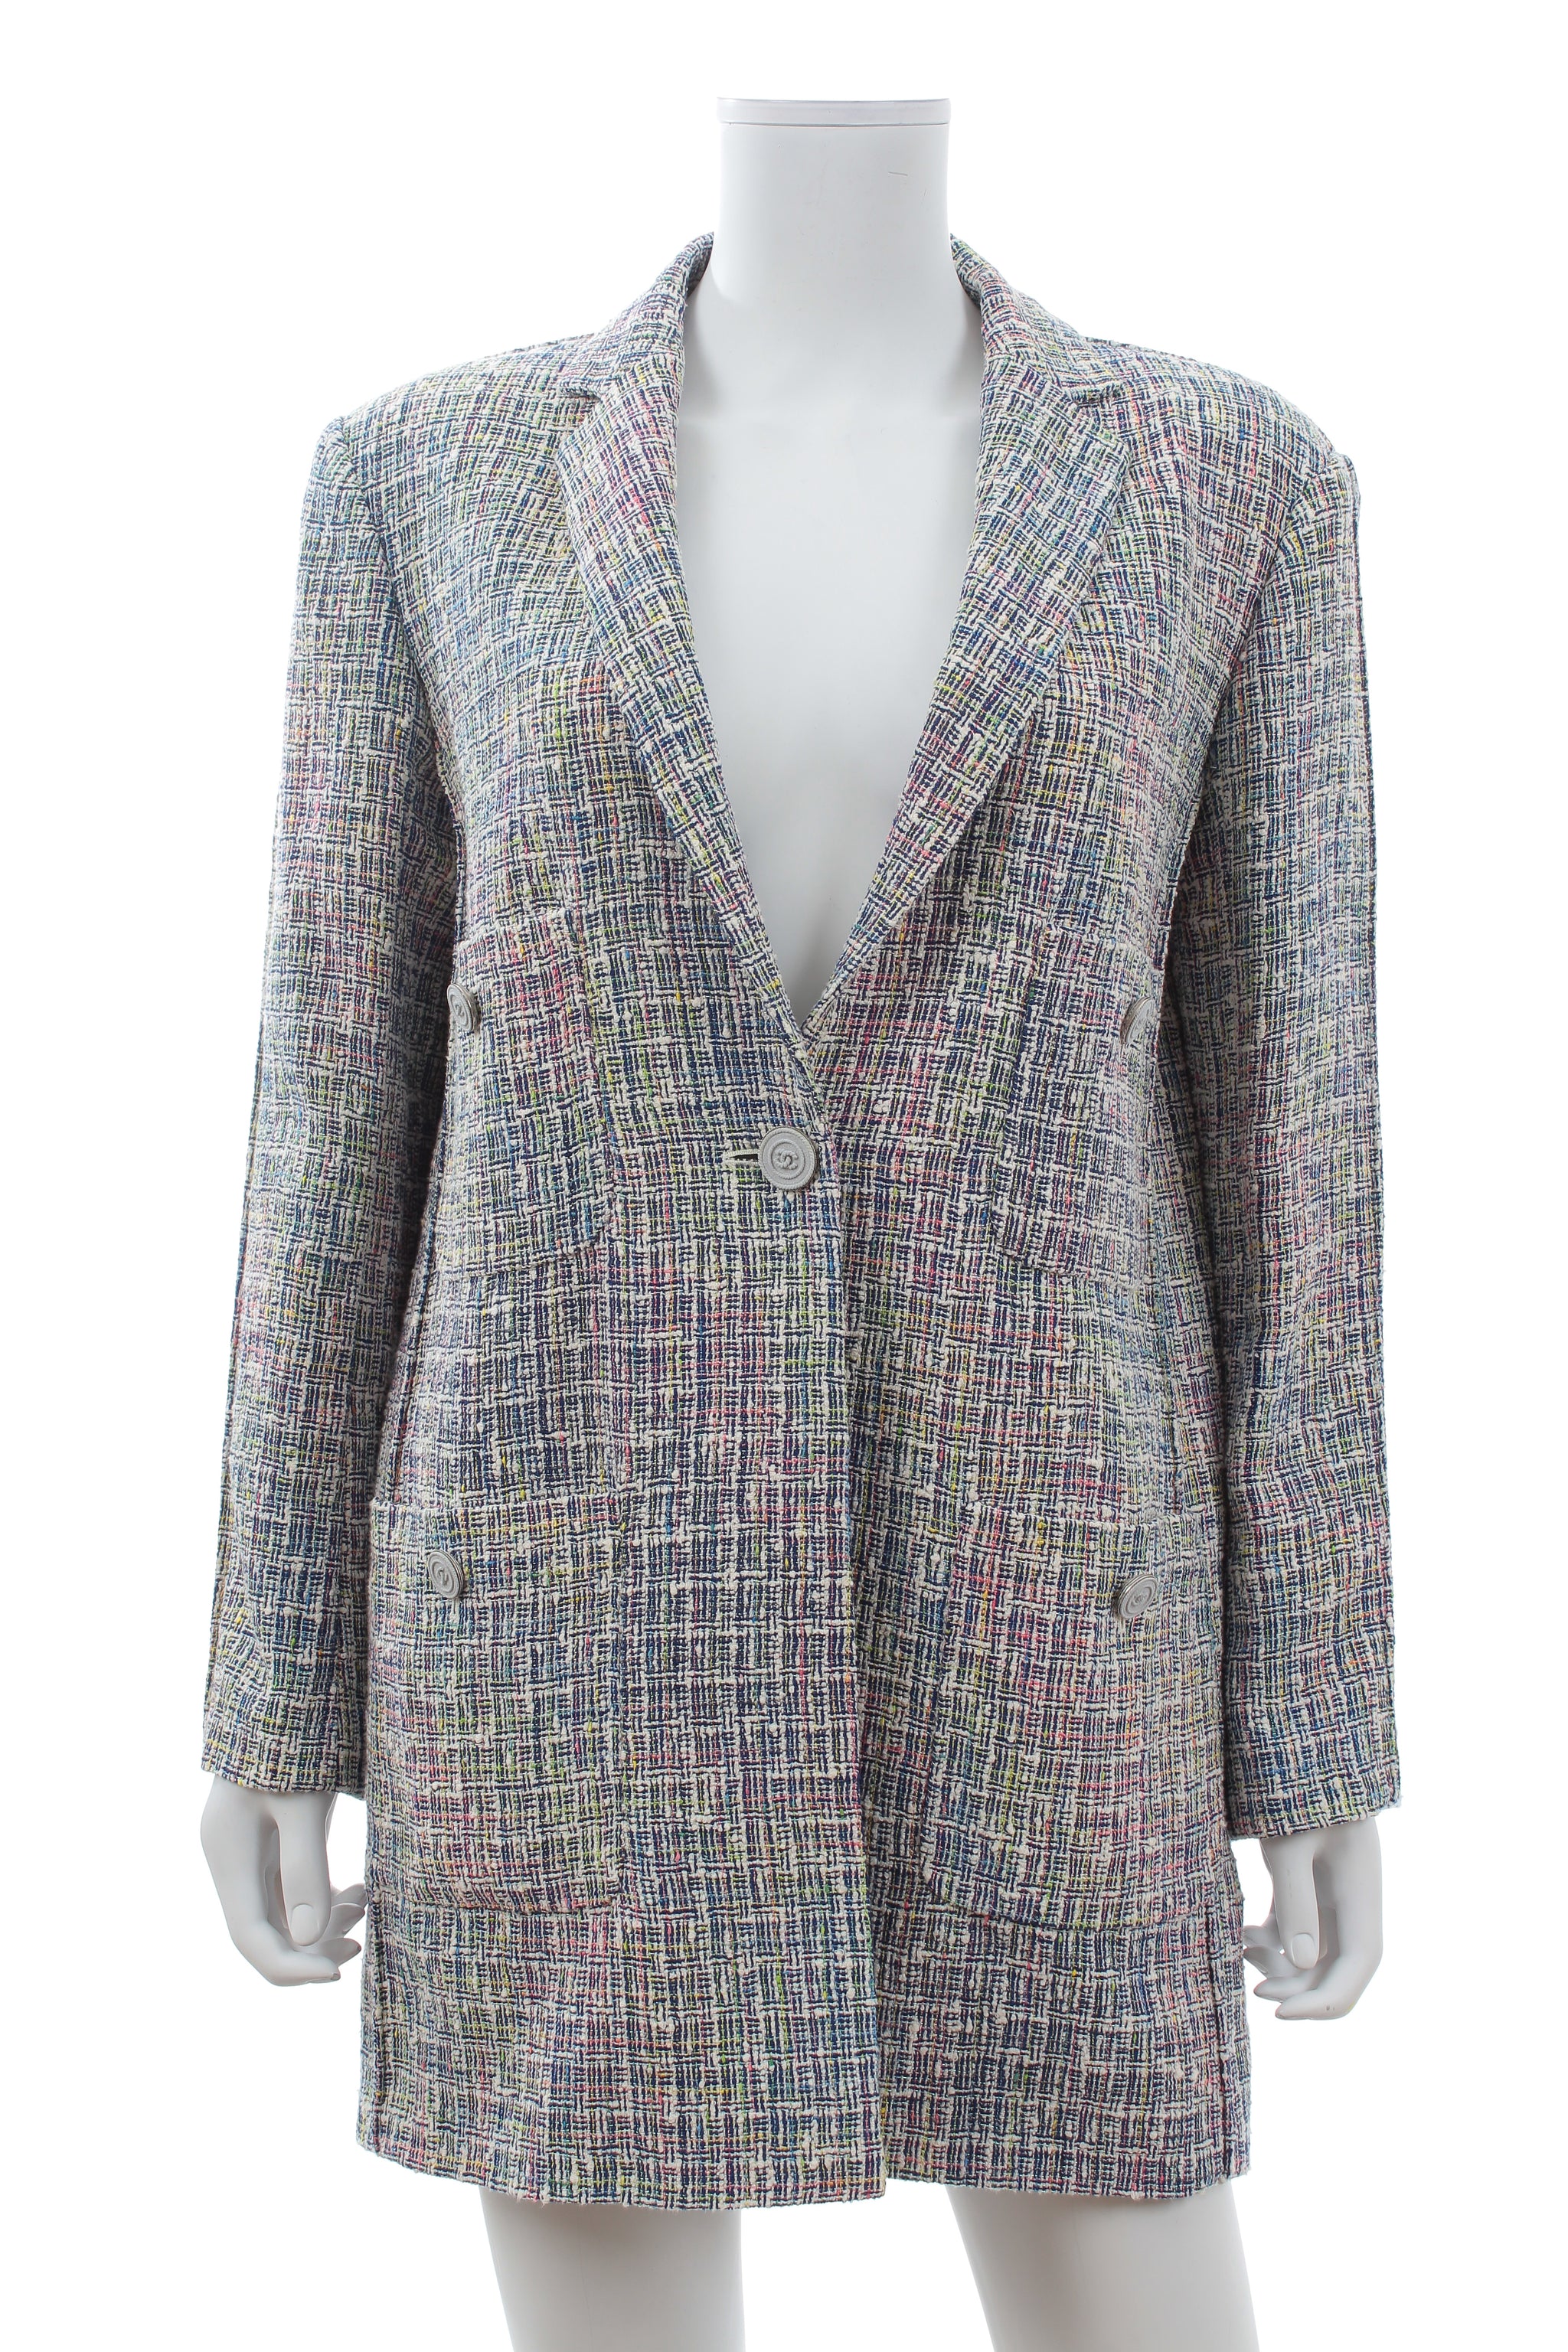 Alessandra Rich Floral-Embroidered Denim Jacket - Closet Upgrade